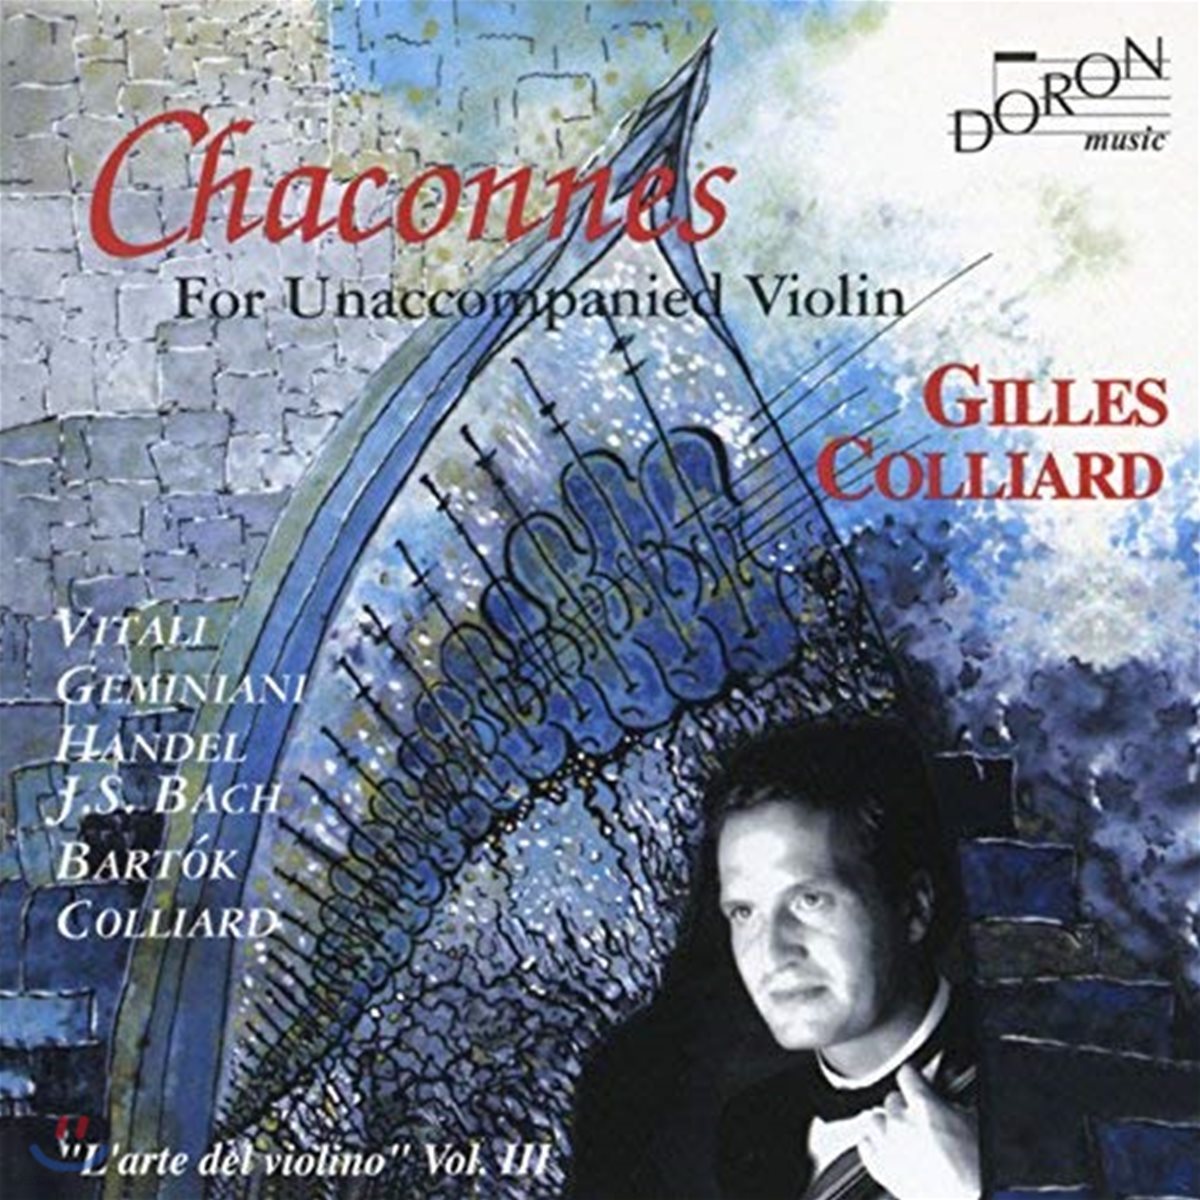 Gilles Colliard 바이올린 독주로 연주한 샤콘느 - 비탈리 / 제미니아이 / 헨델 / 바흐 / 바르톡 (Chaconnes for Unaccompanied Violin)